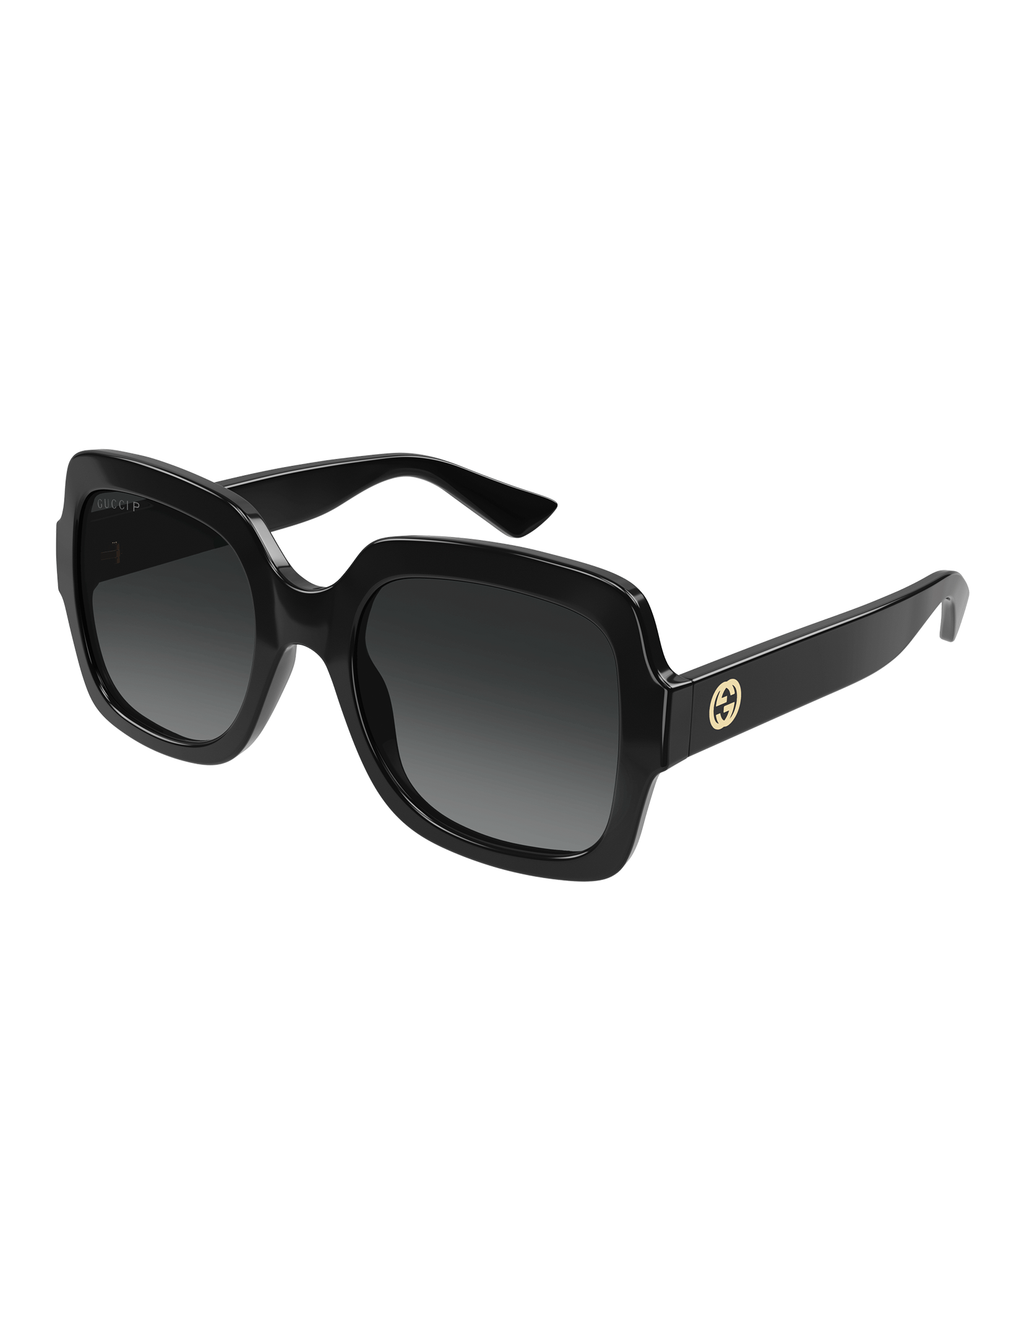 Jetlag Square Sunglasses, Black/Grey